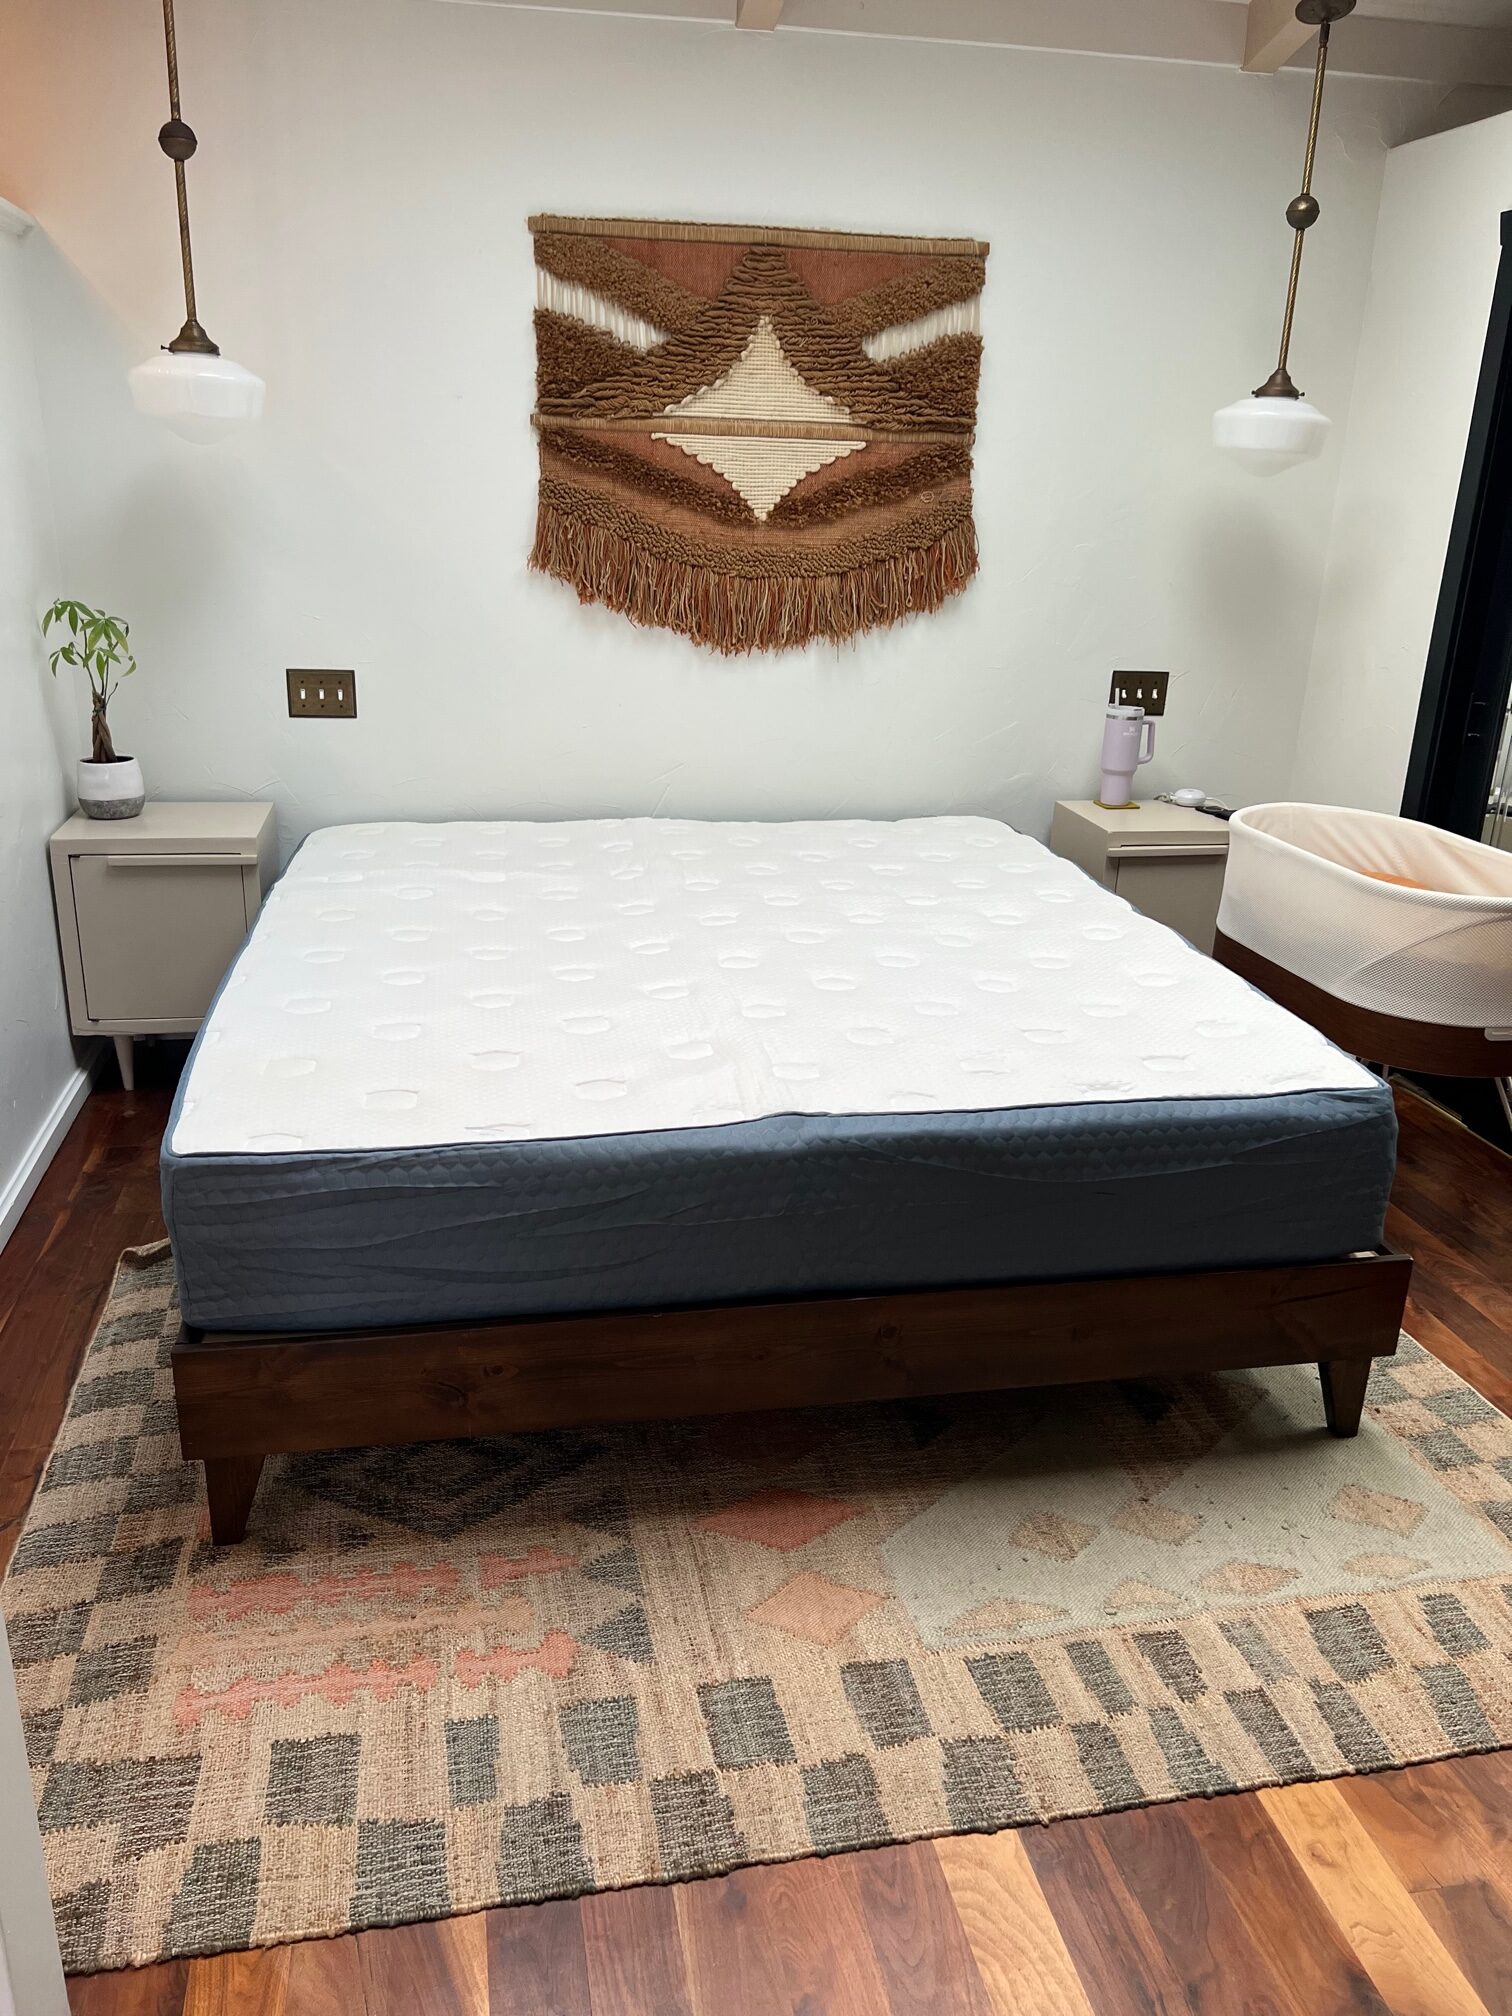 molecule hybrid mattress on frame in bedroom